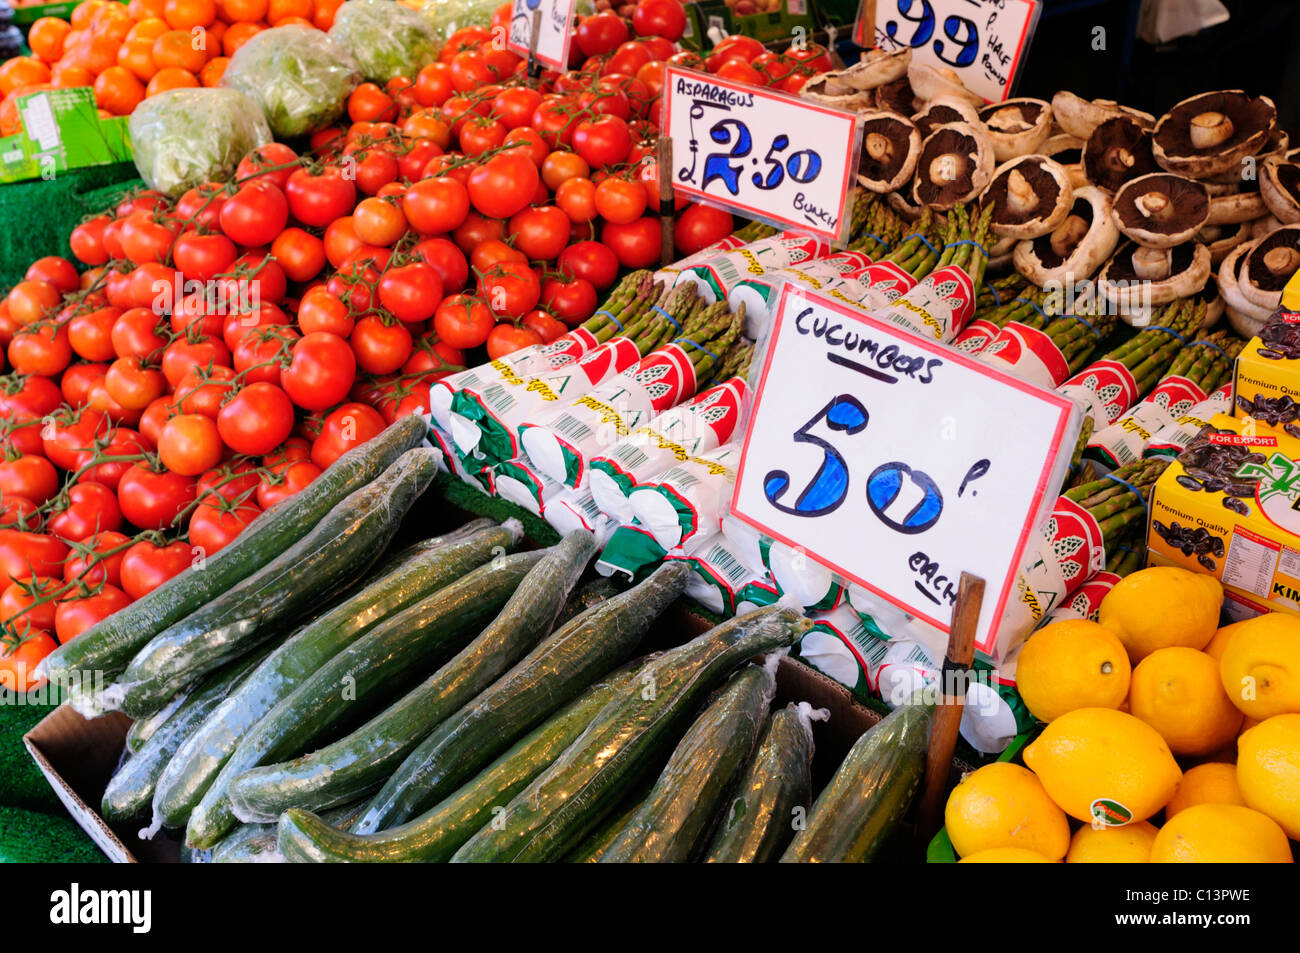 Fruit and Vegetable Stall Display on The Market, Cambridge, England, UK Stock Photo